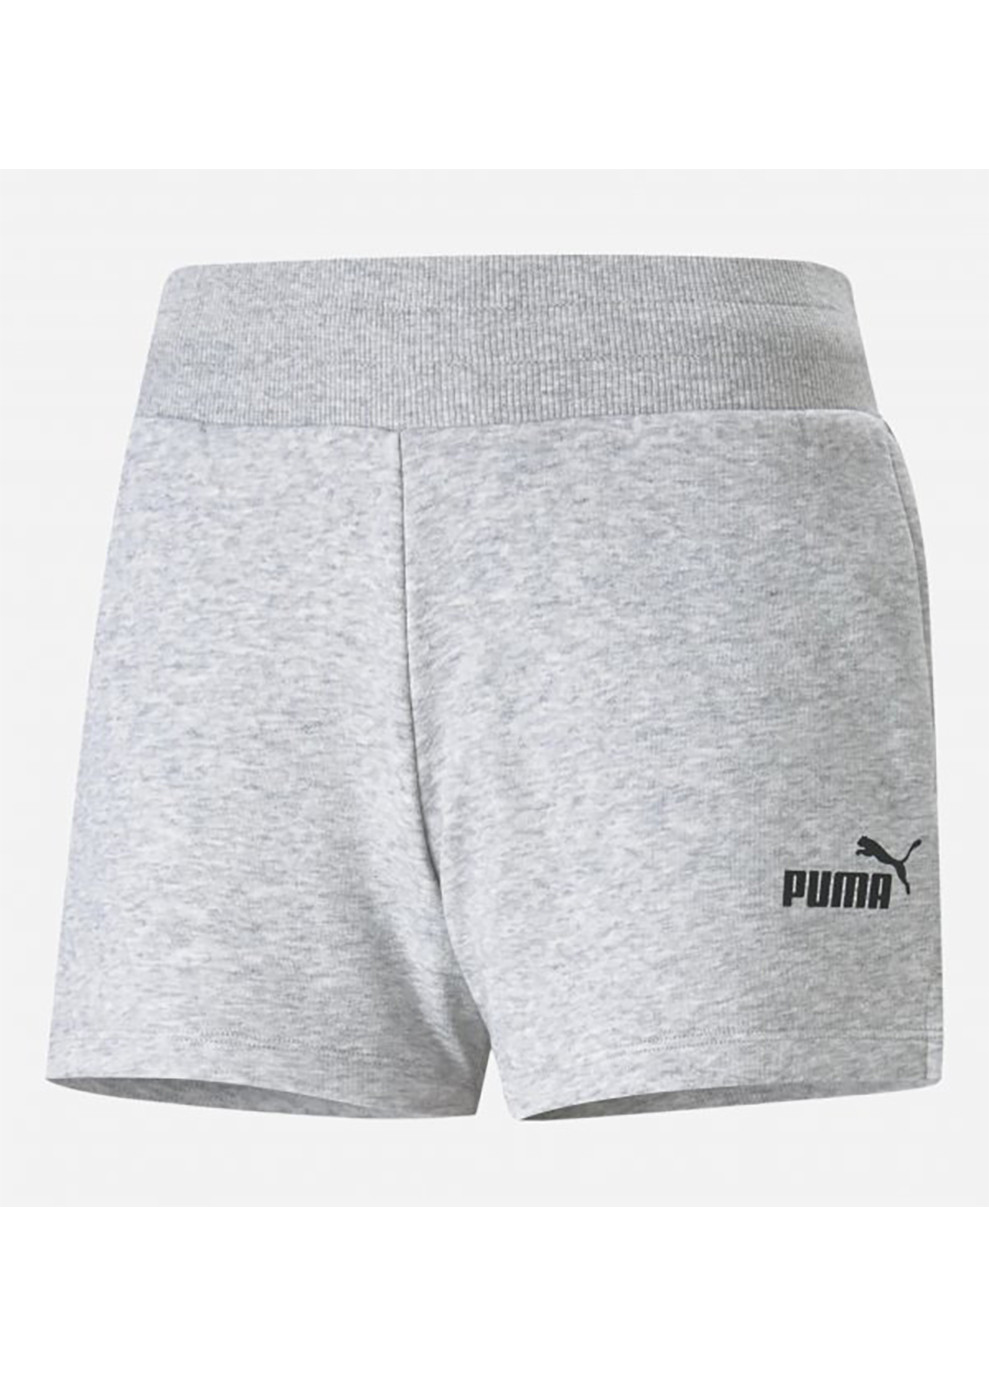 Cпортивные шорты Ess Sweat Shorts Light Gray Heather Серый Puma (260946377)